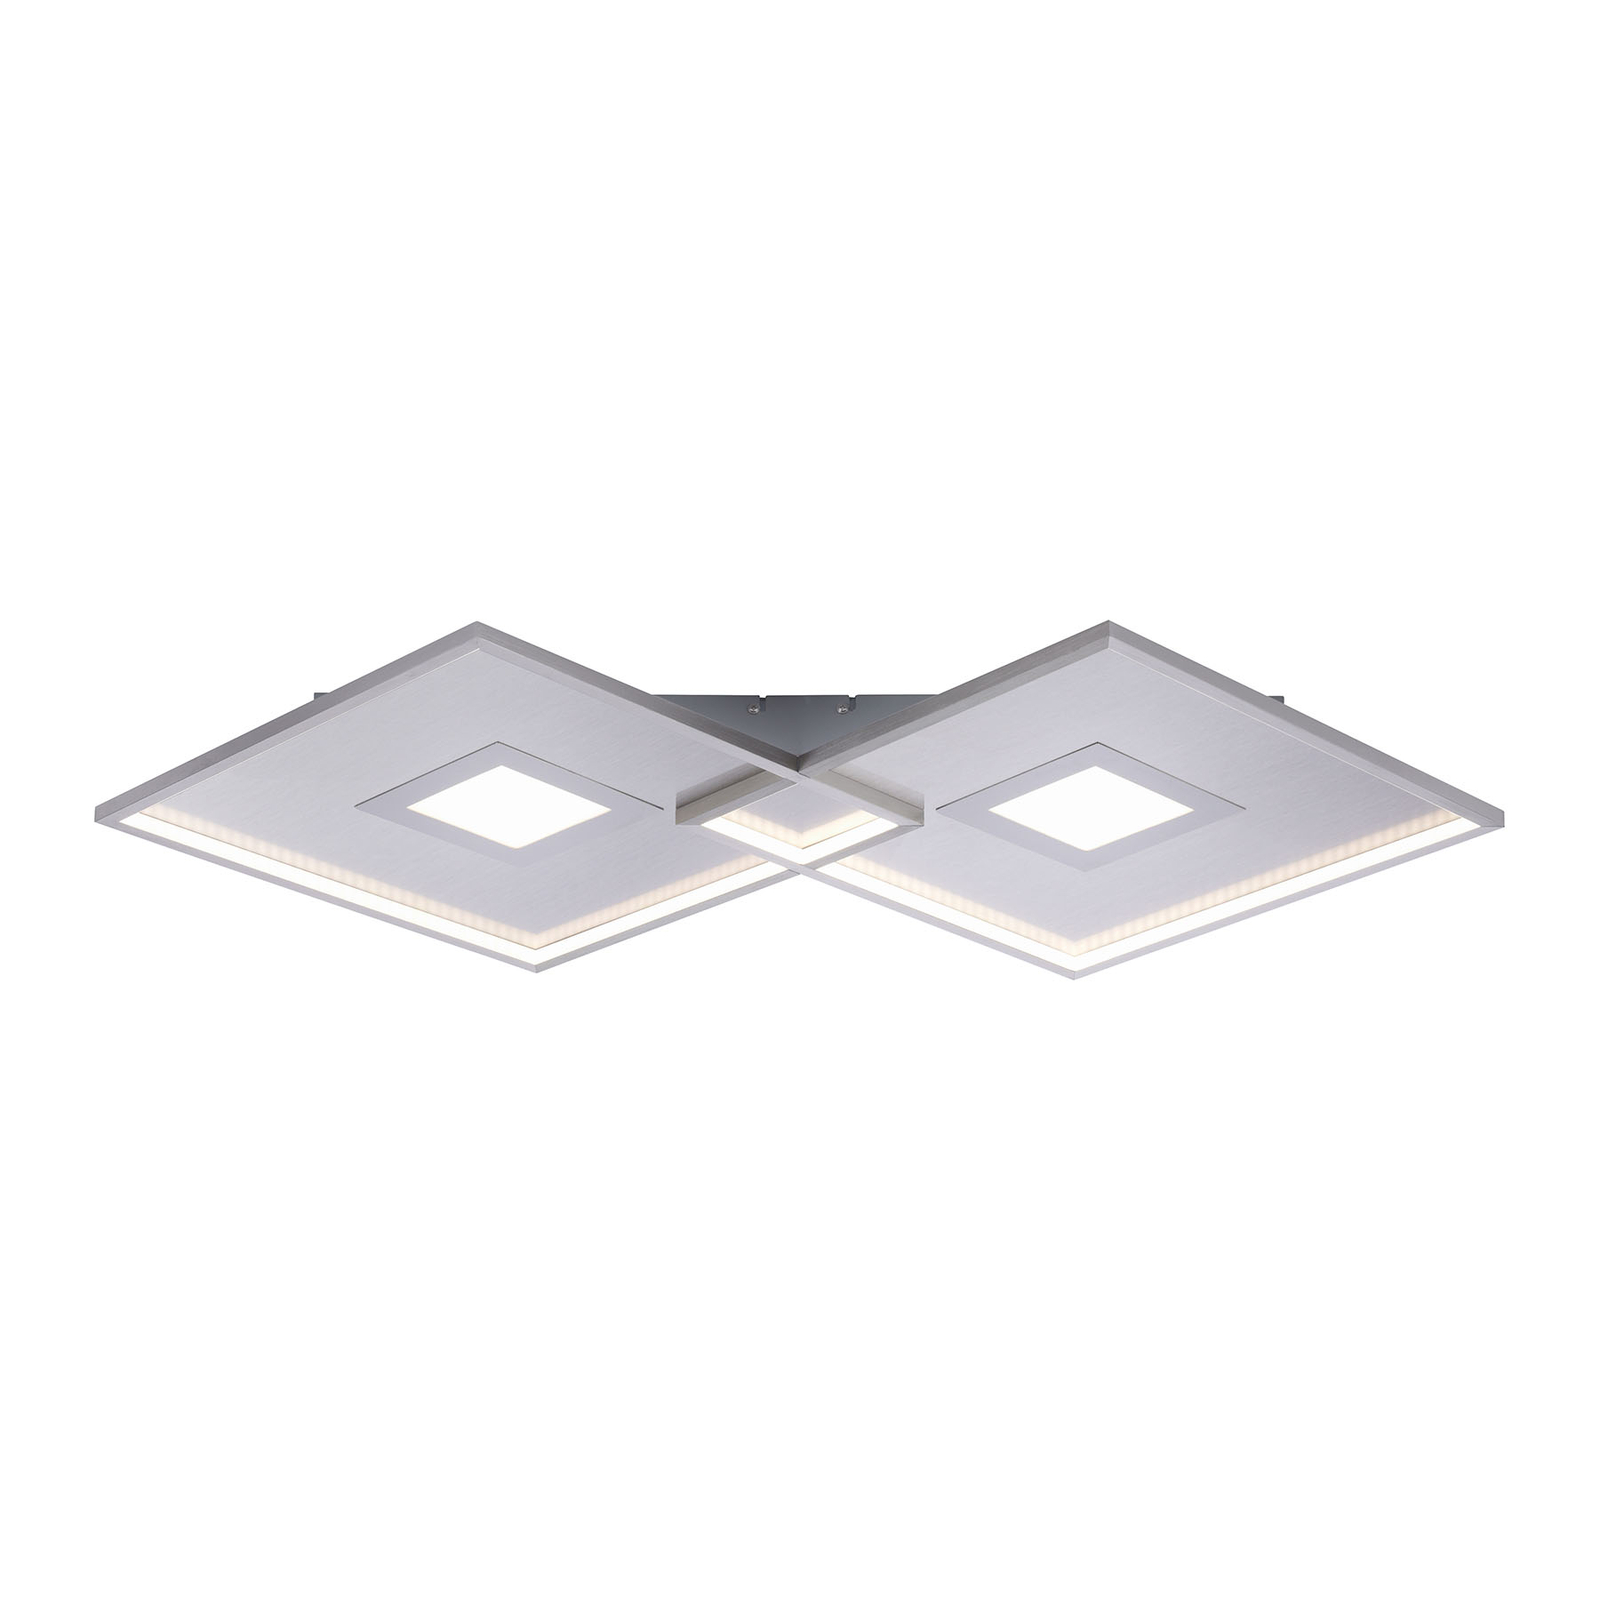 LED plafondlamp Amara, twee vierkanten, zilver